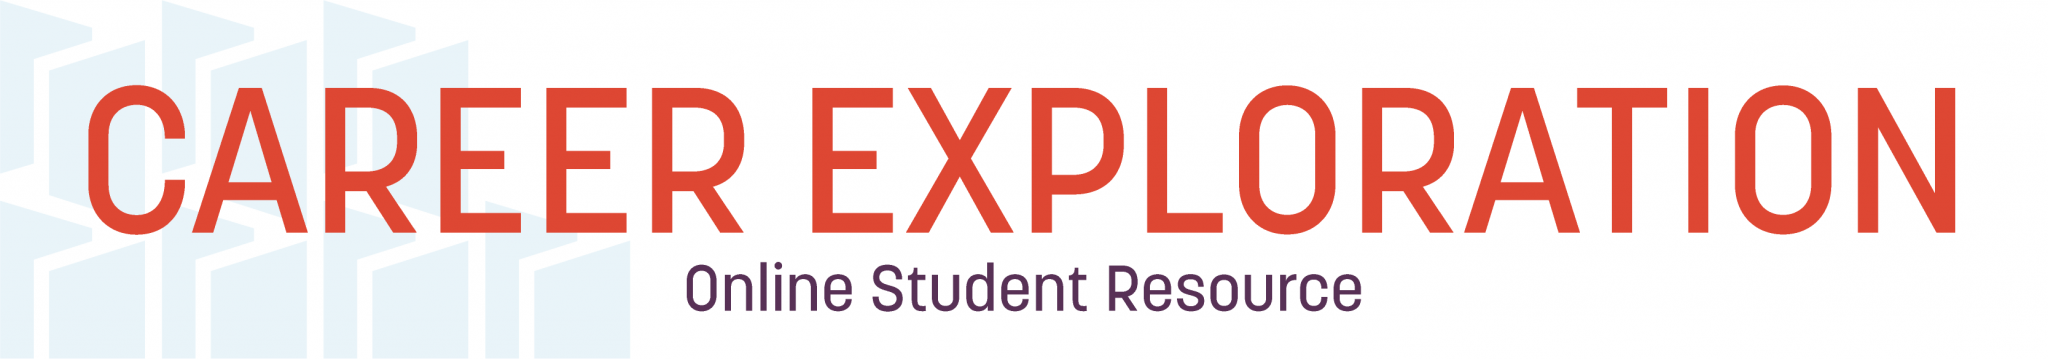 Career Exploration Online Student Resource